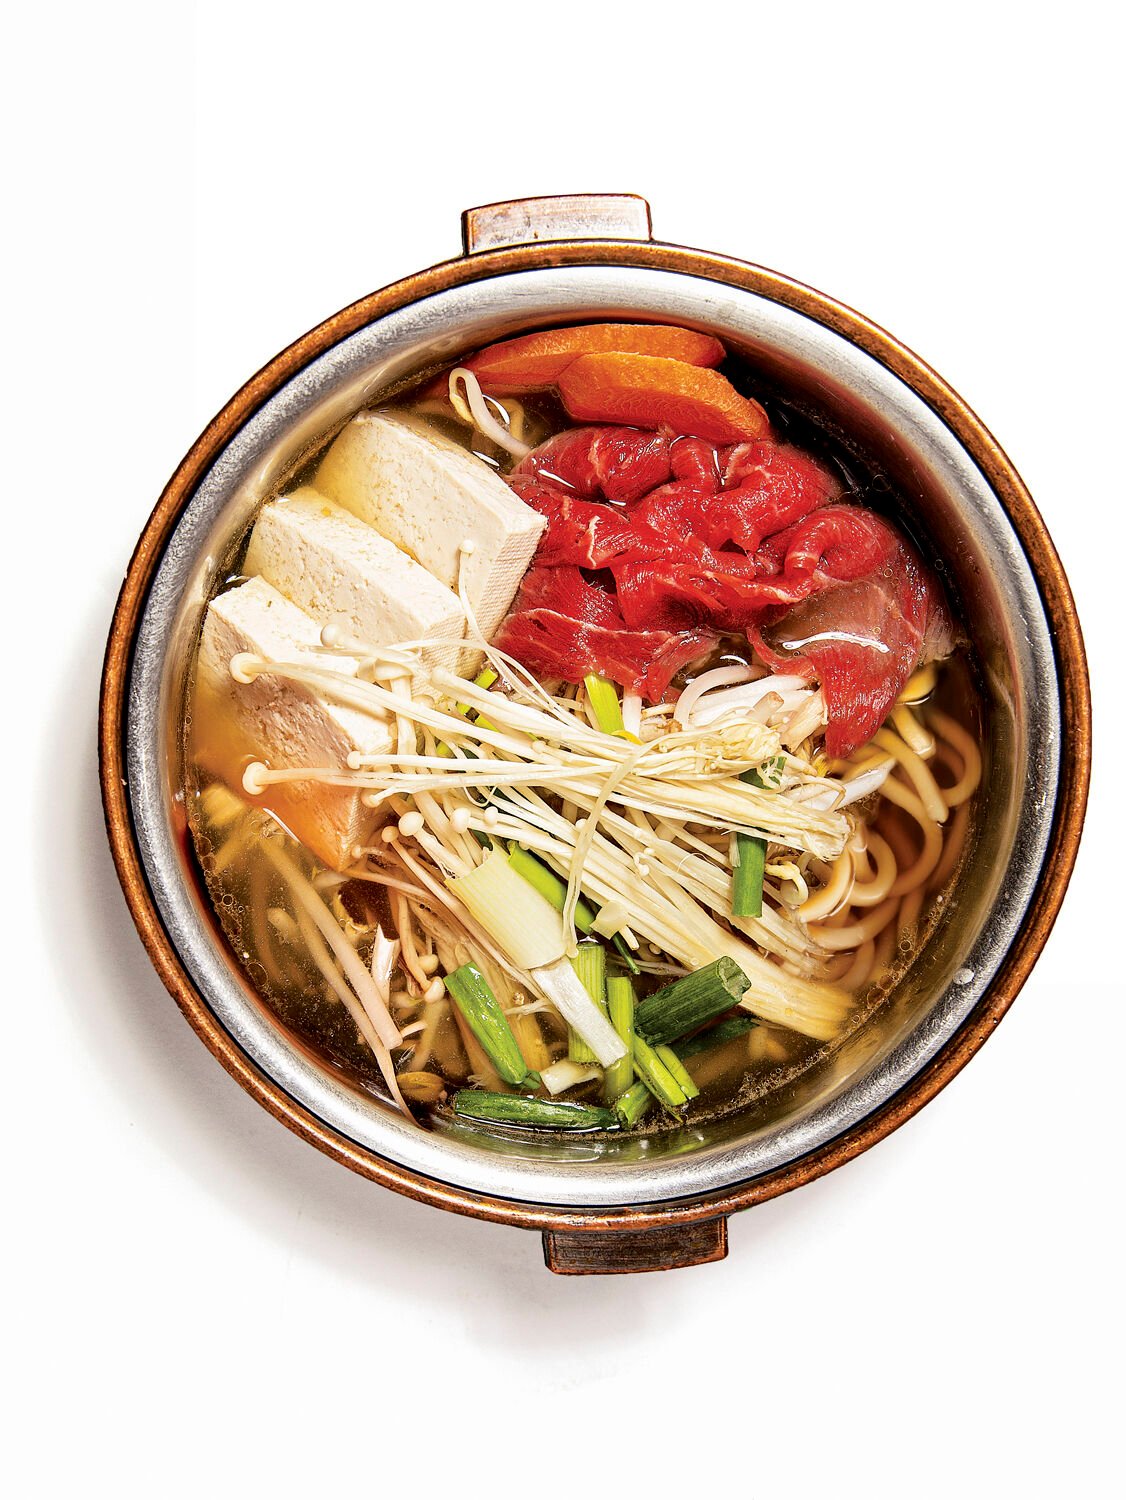 Little Korea introduces Asian hot pot dining to Springfield